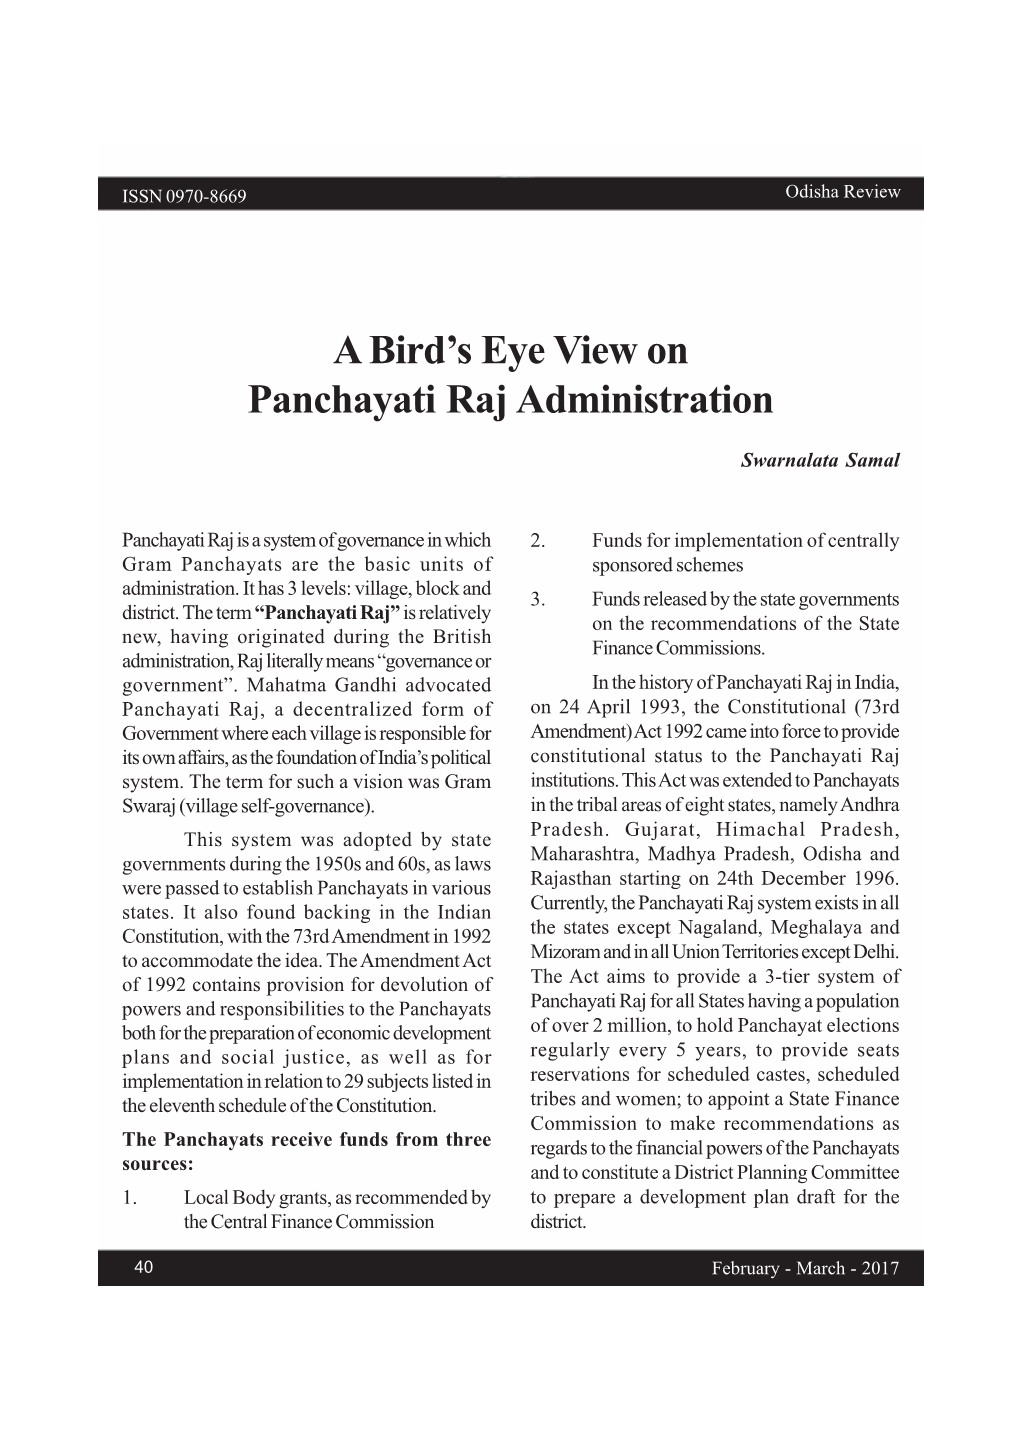 A Bird's Eye View on Panchayati Raj Administration